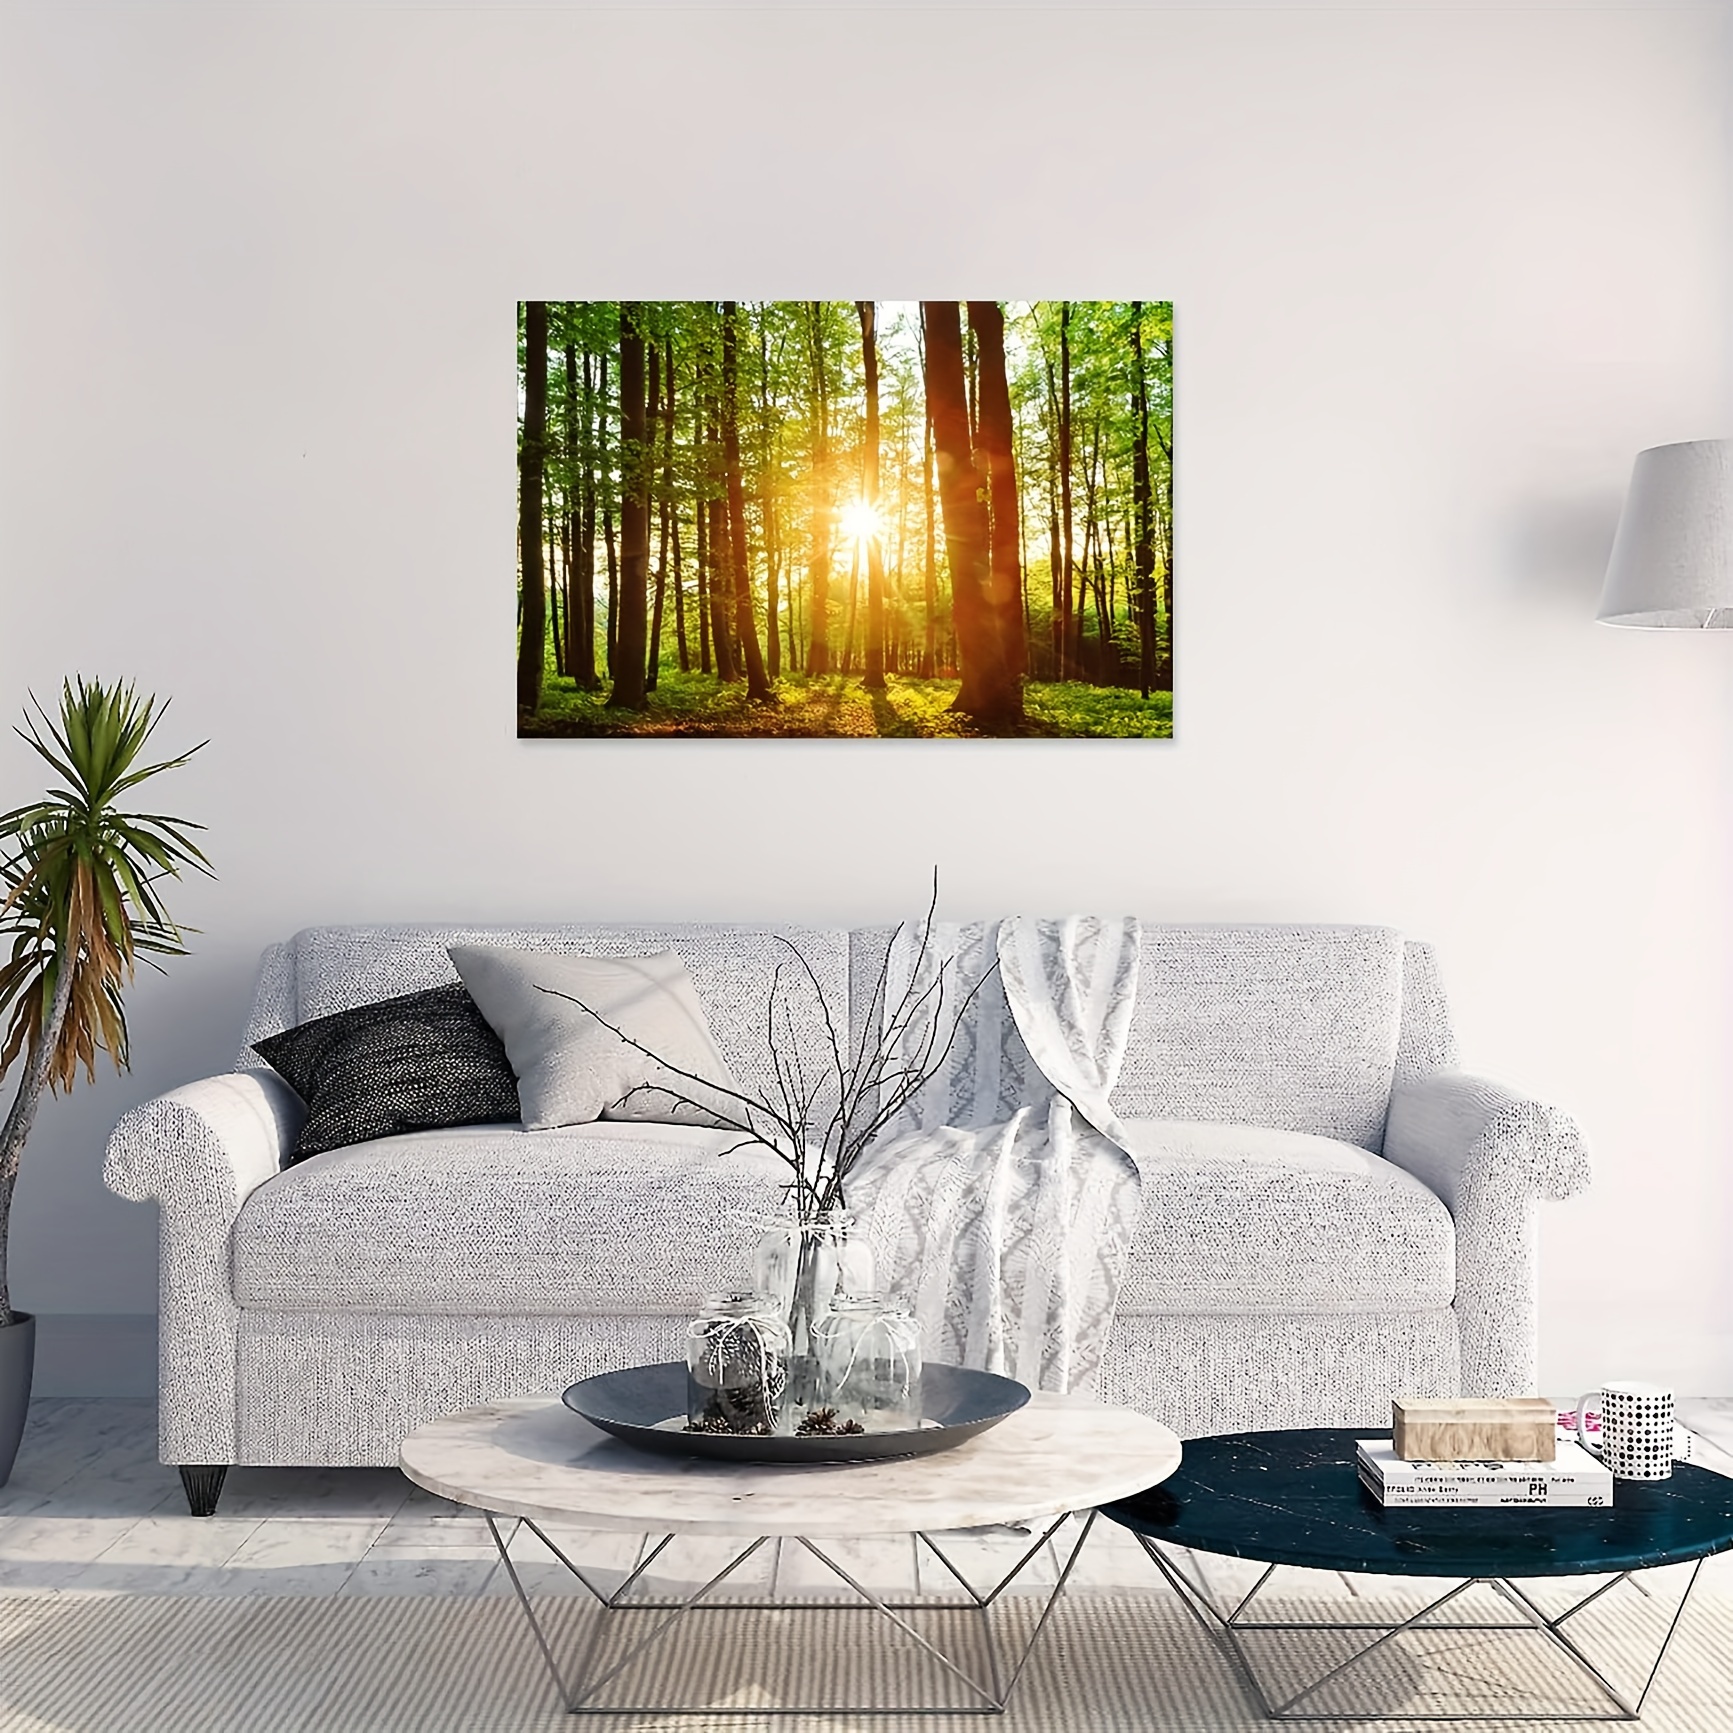 Lienzo grande para pared, arte moderno de pared de bosque natural,  impresión en lienzo, decoración del hogar, luz solar que penetra en el  bosque